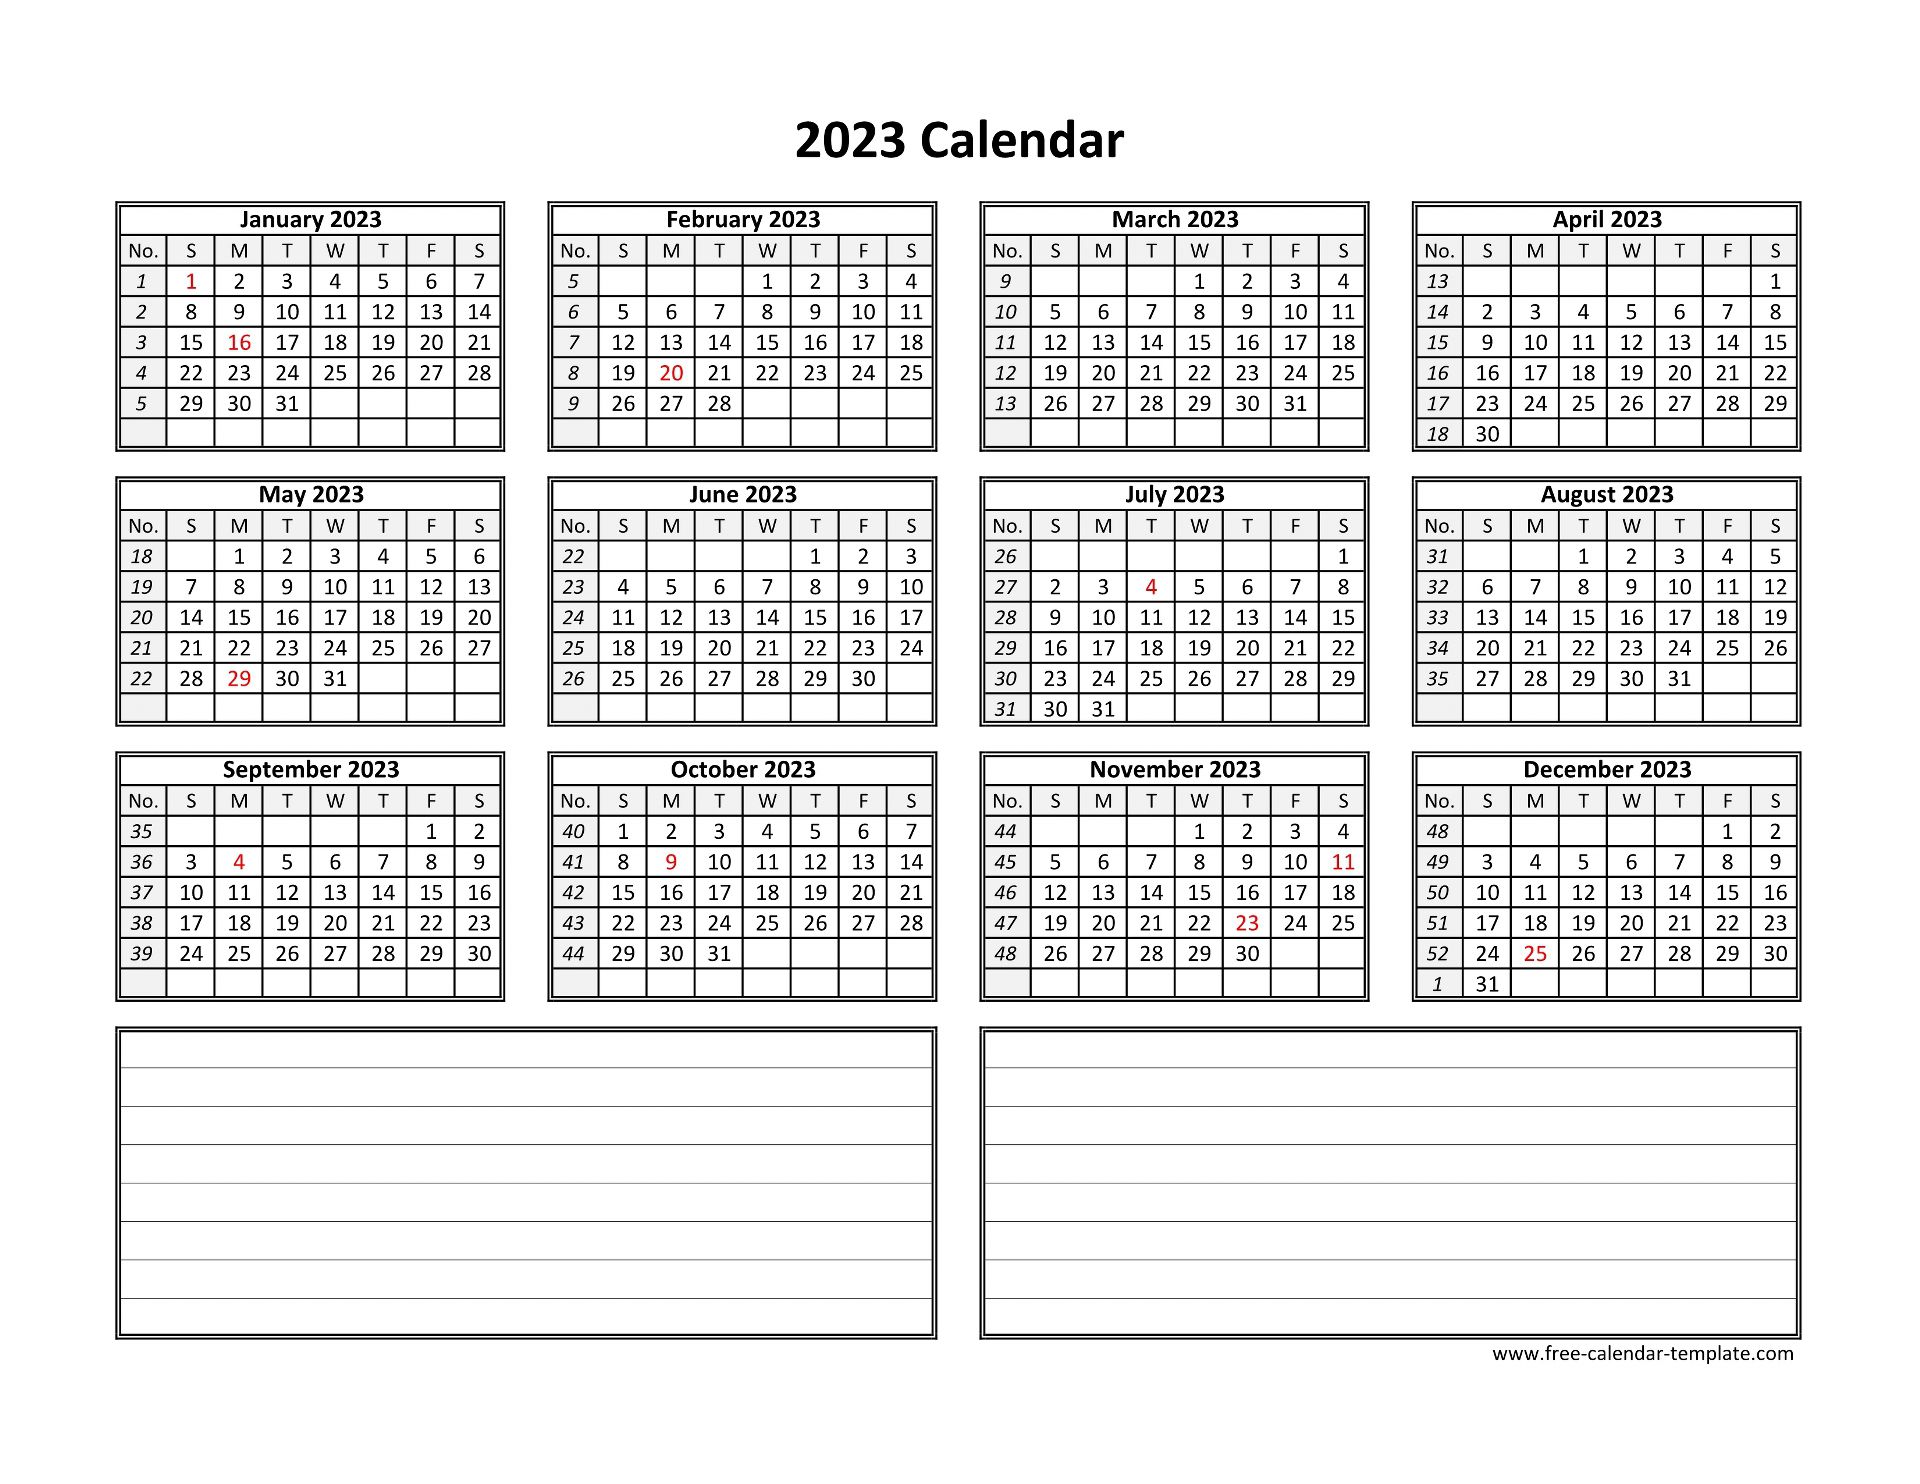 printable-yearly-calendar-2023-free-calendar-template-com